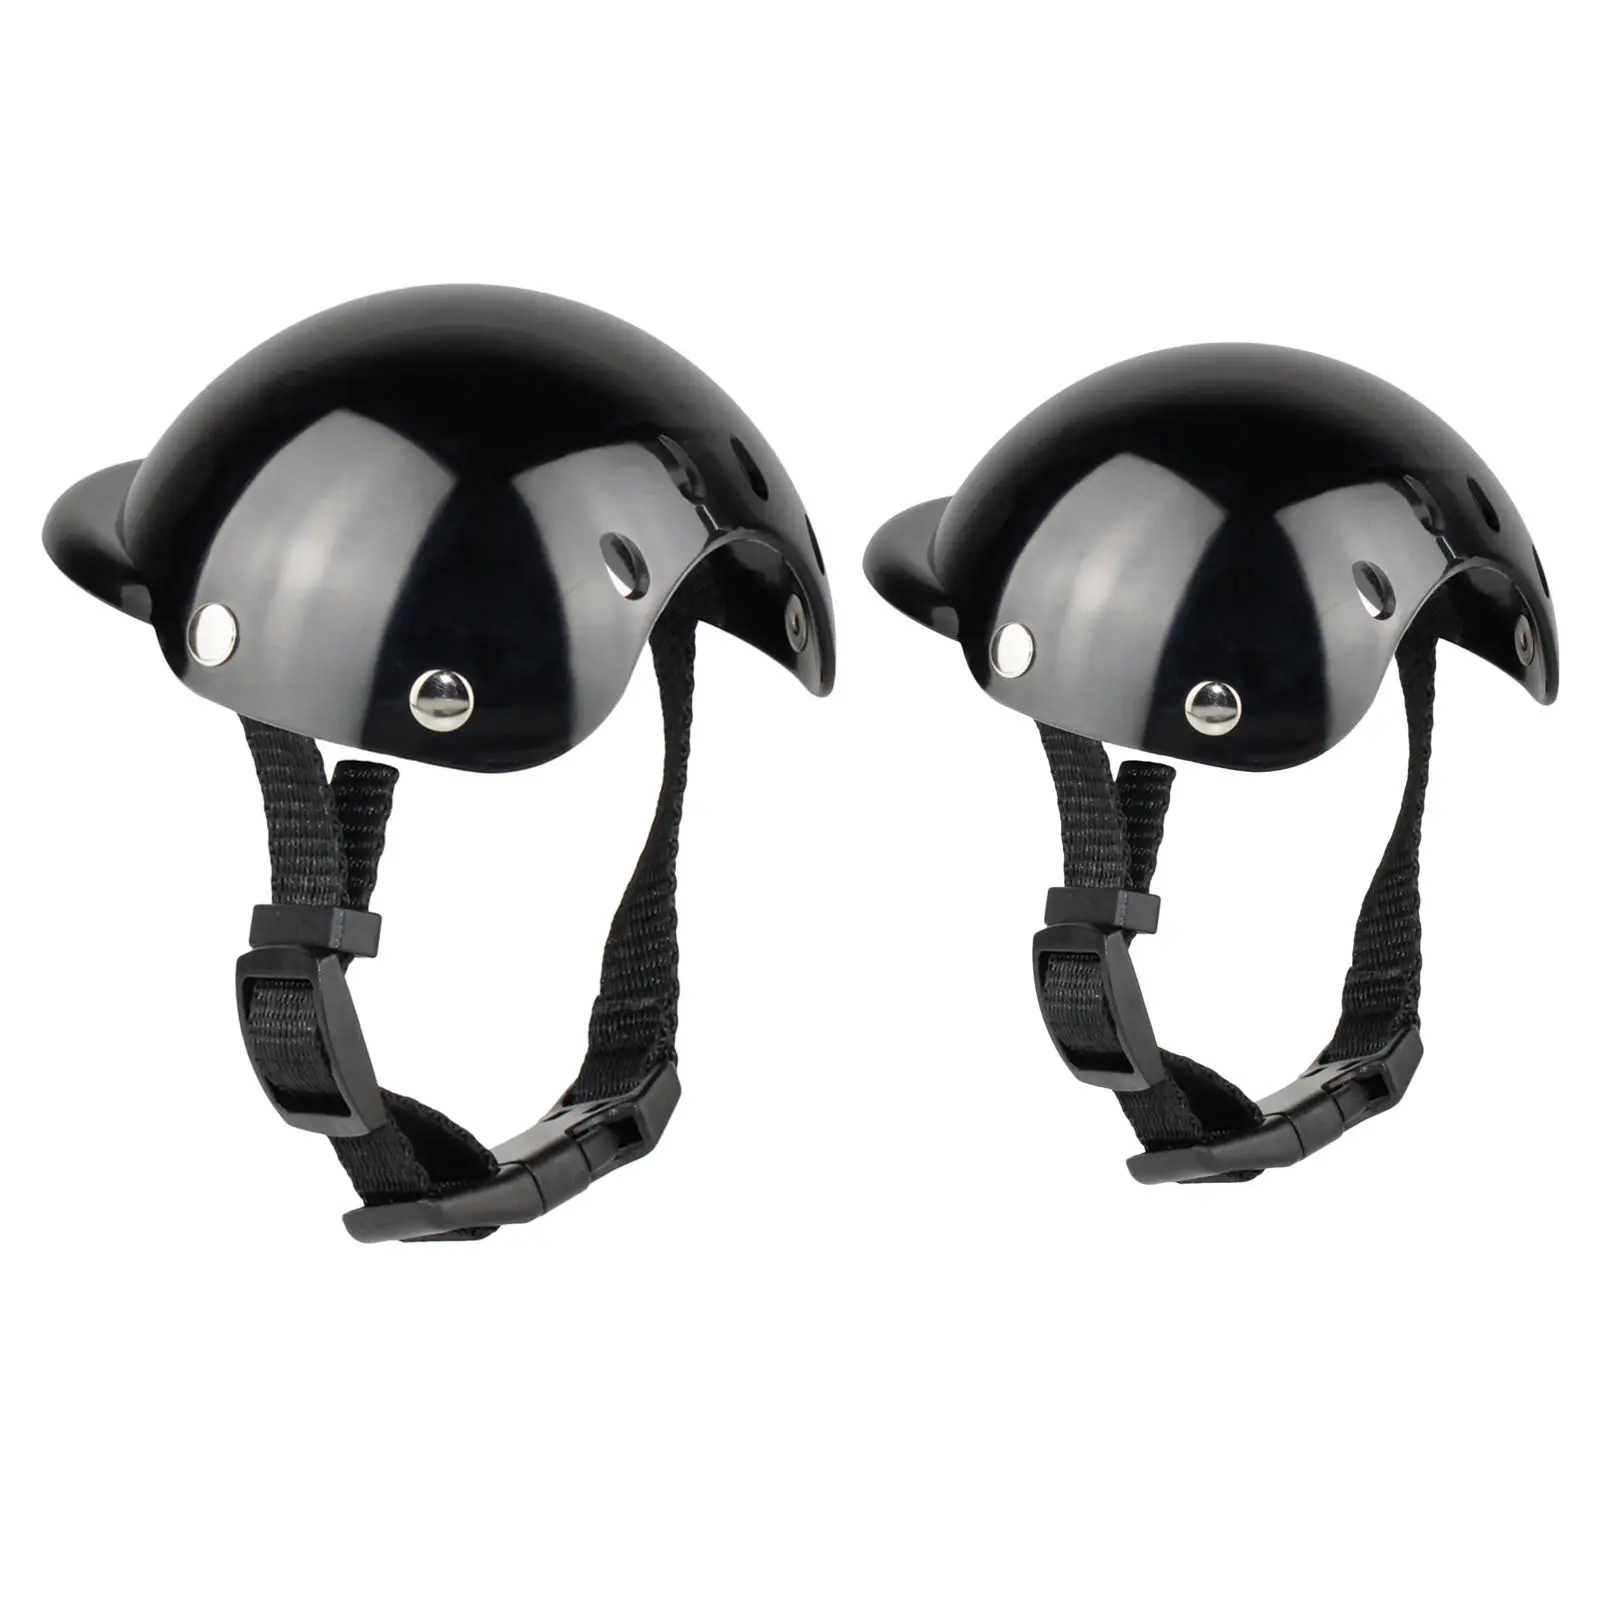 Pet Helmet Sun Rain Protection S-M Size Safety Motorcycle Hat Pet Hat for Walking